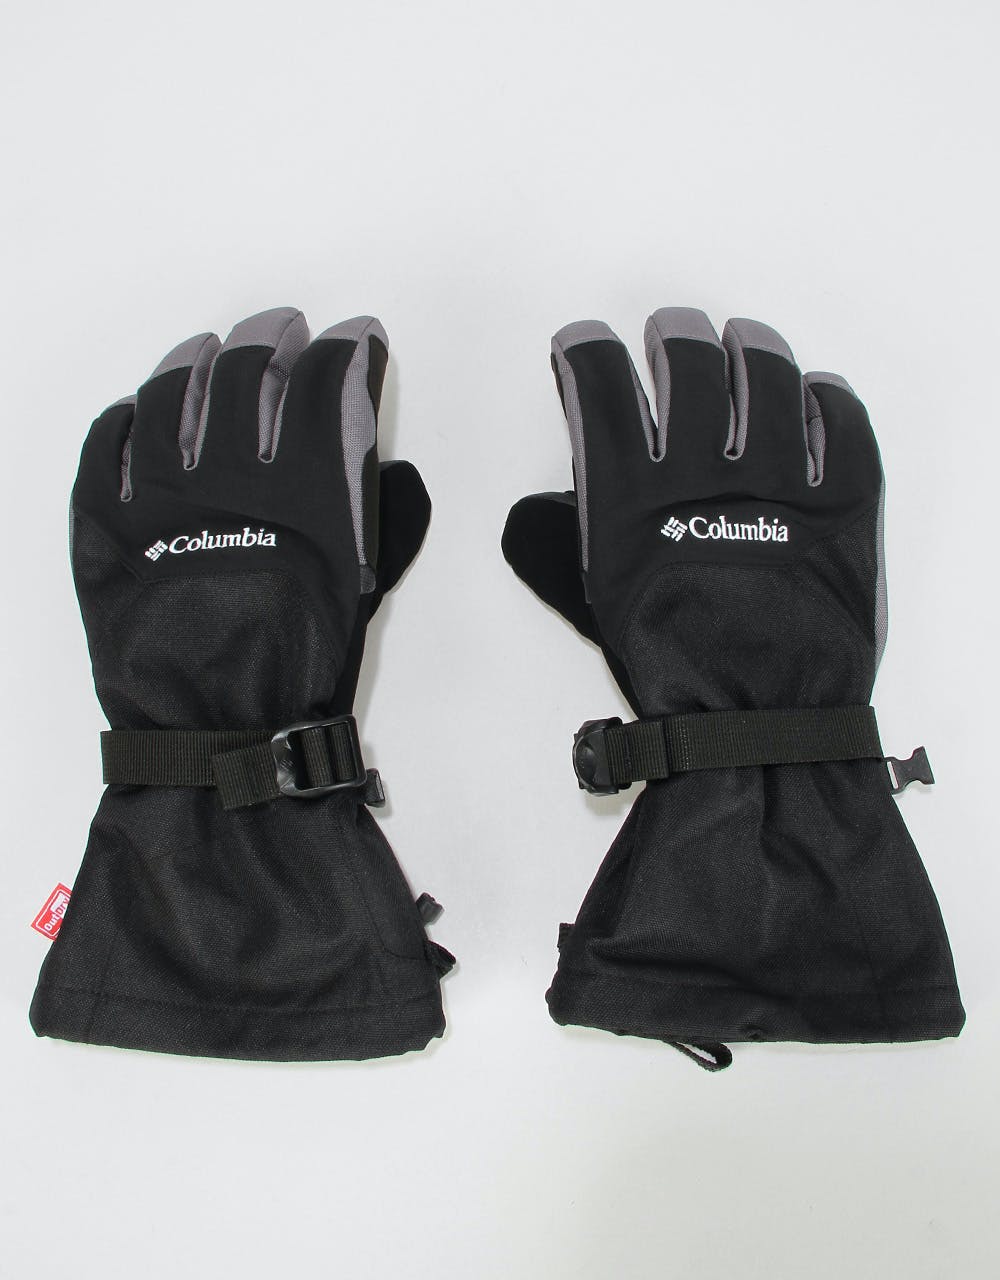 Columbia Inferno Range™ 2020 Snowboard Gloves - Black/Graphite